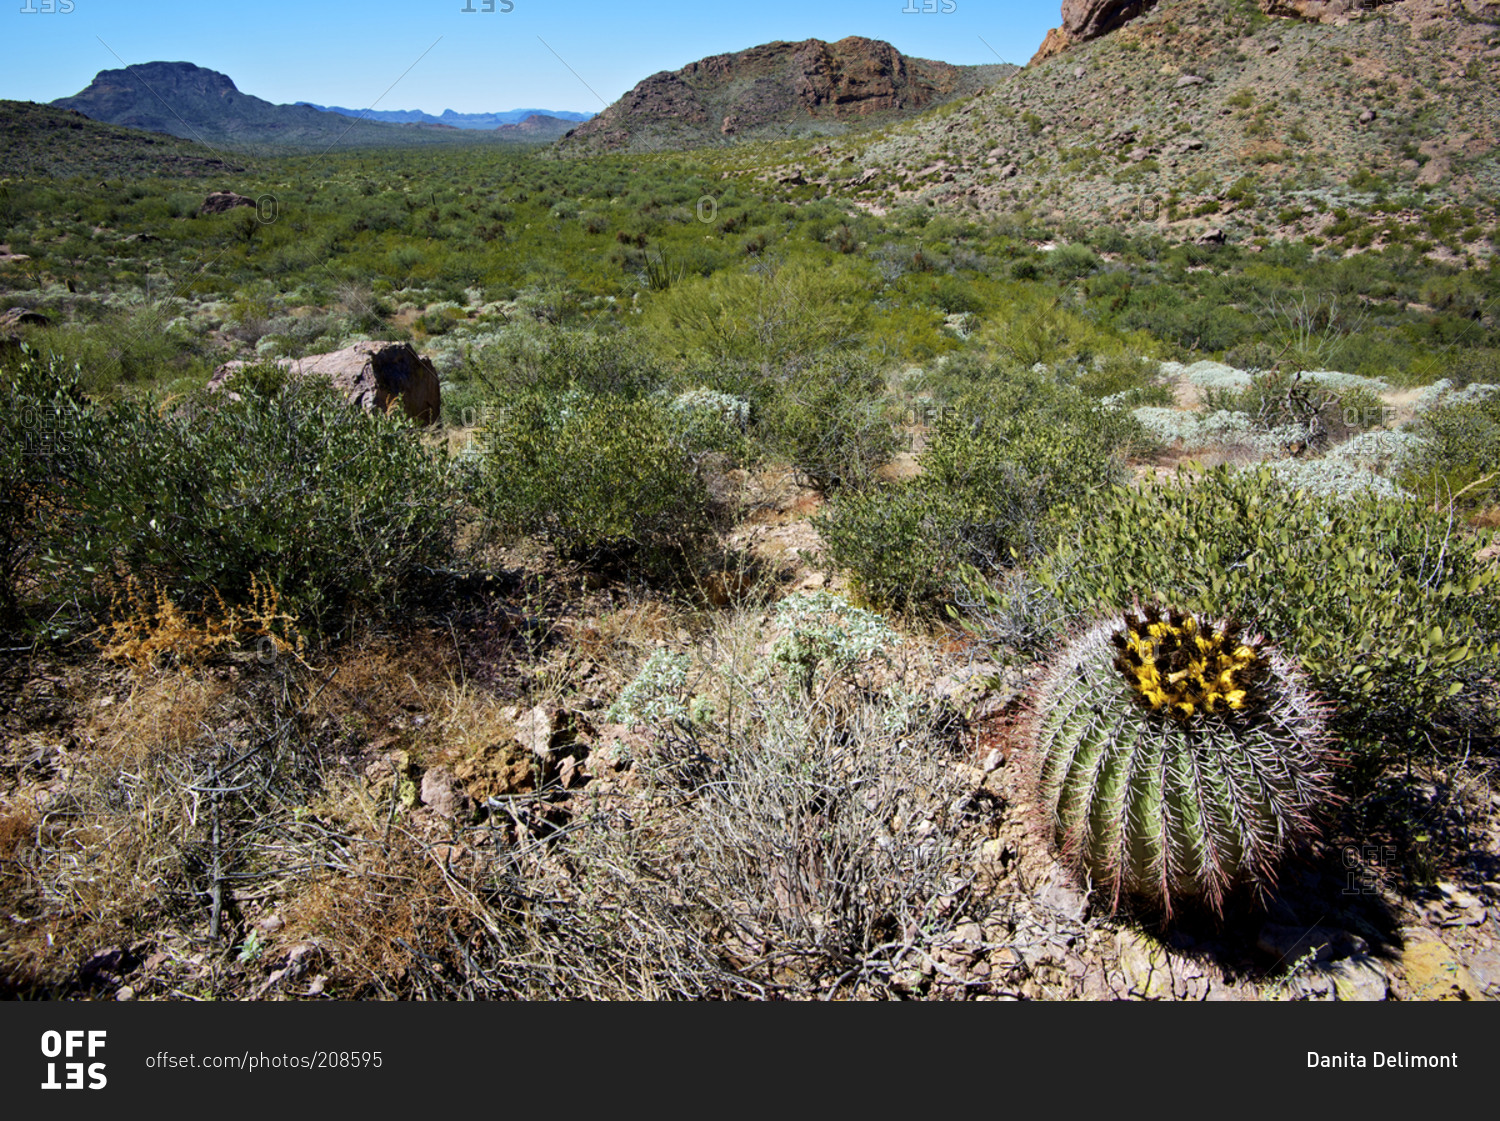 Barrel Cactus blooms in a desert wash in Organ Pipe National Monument, Arizona